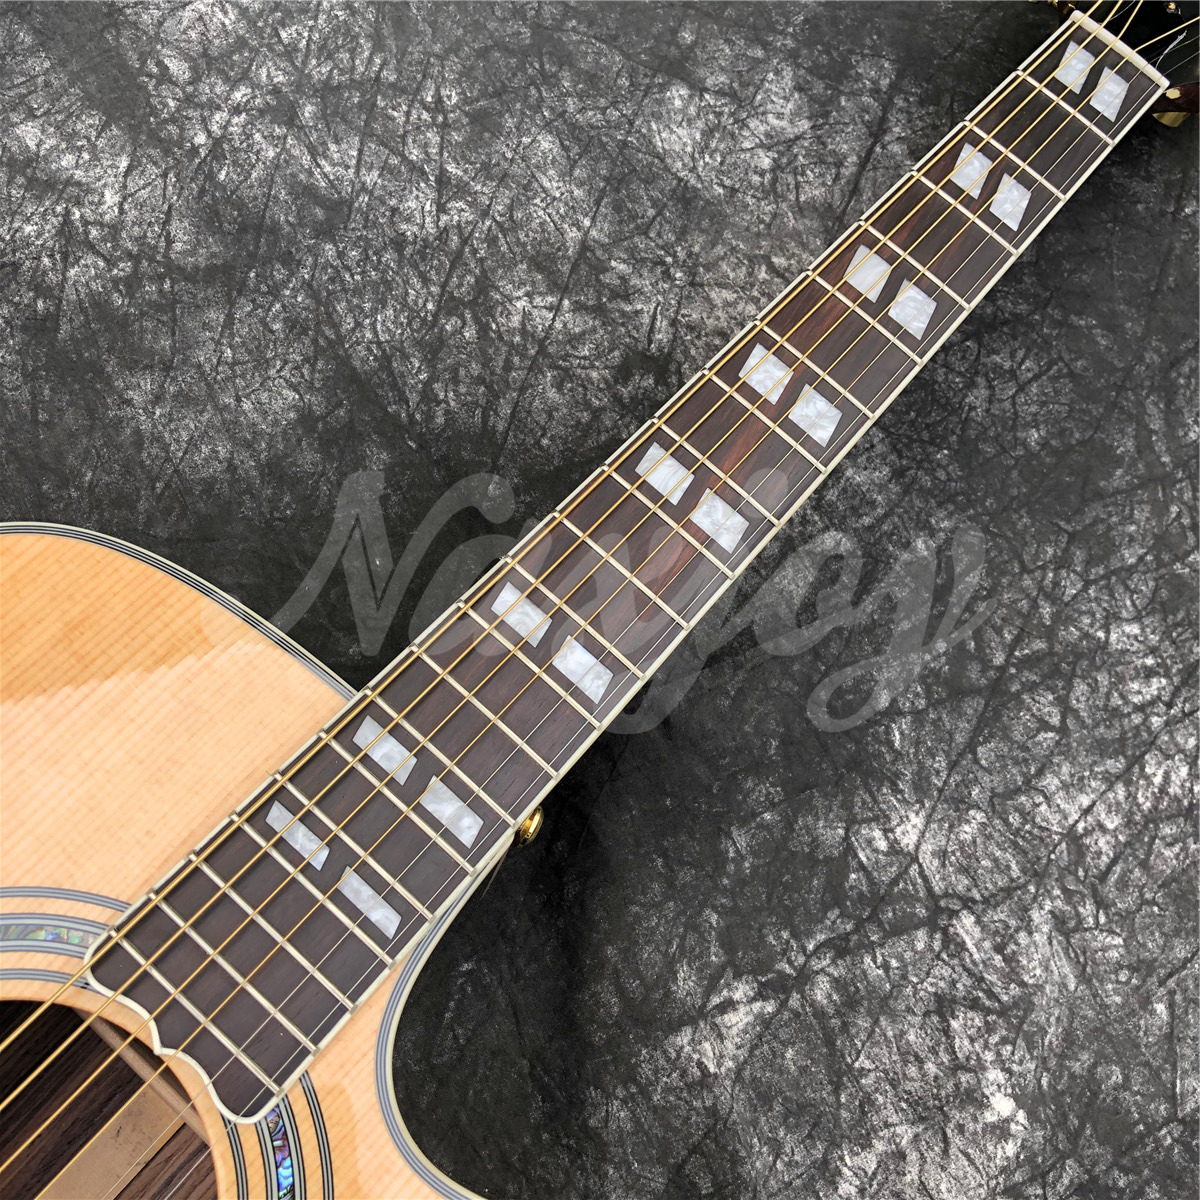 Cutaway Solid Spruce Songwriter Guitarra acústica 41 polegadas Rosewood Body Guitarra elétrica